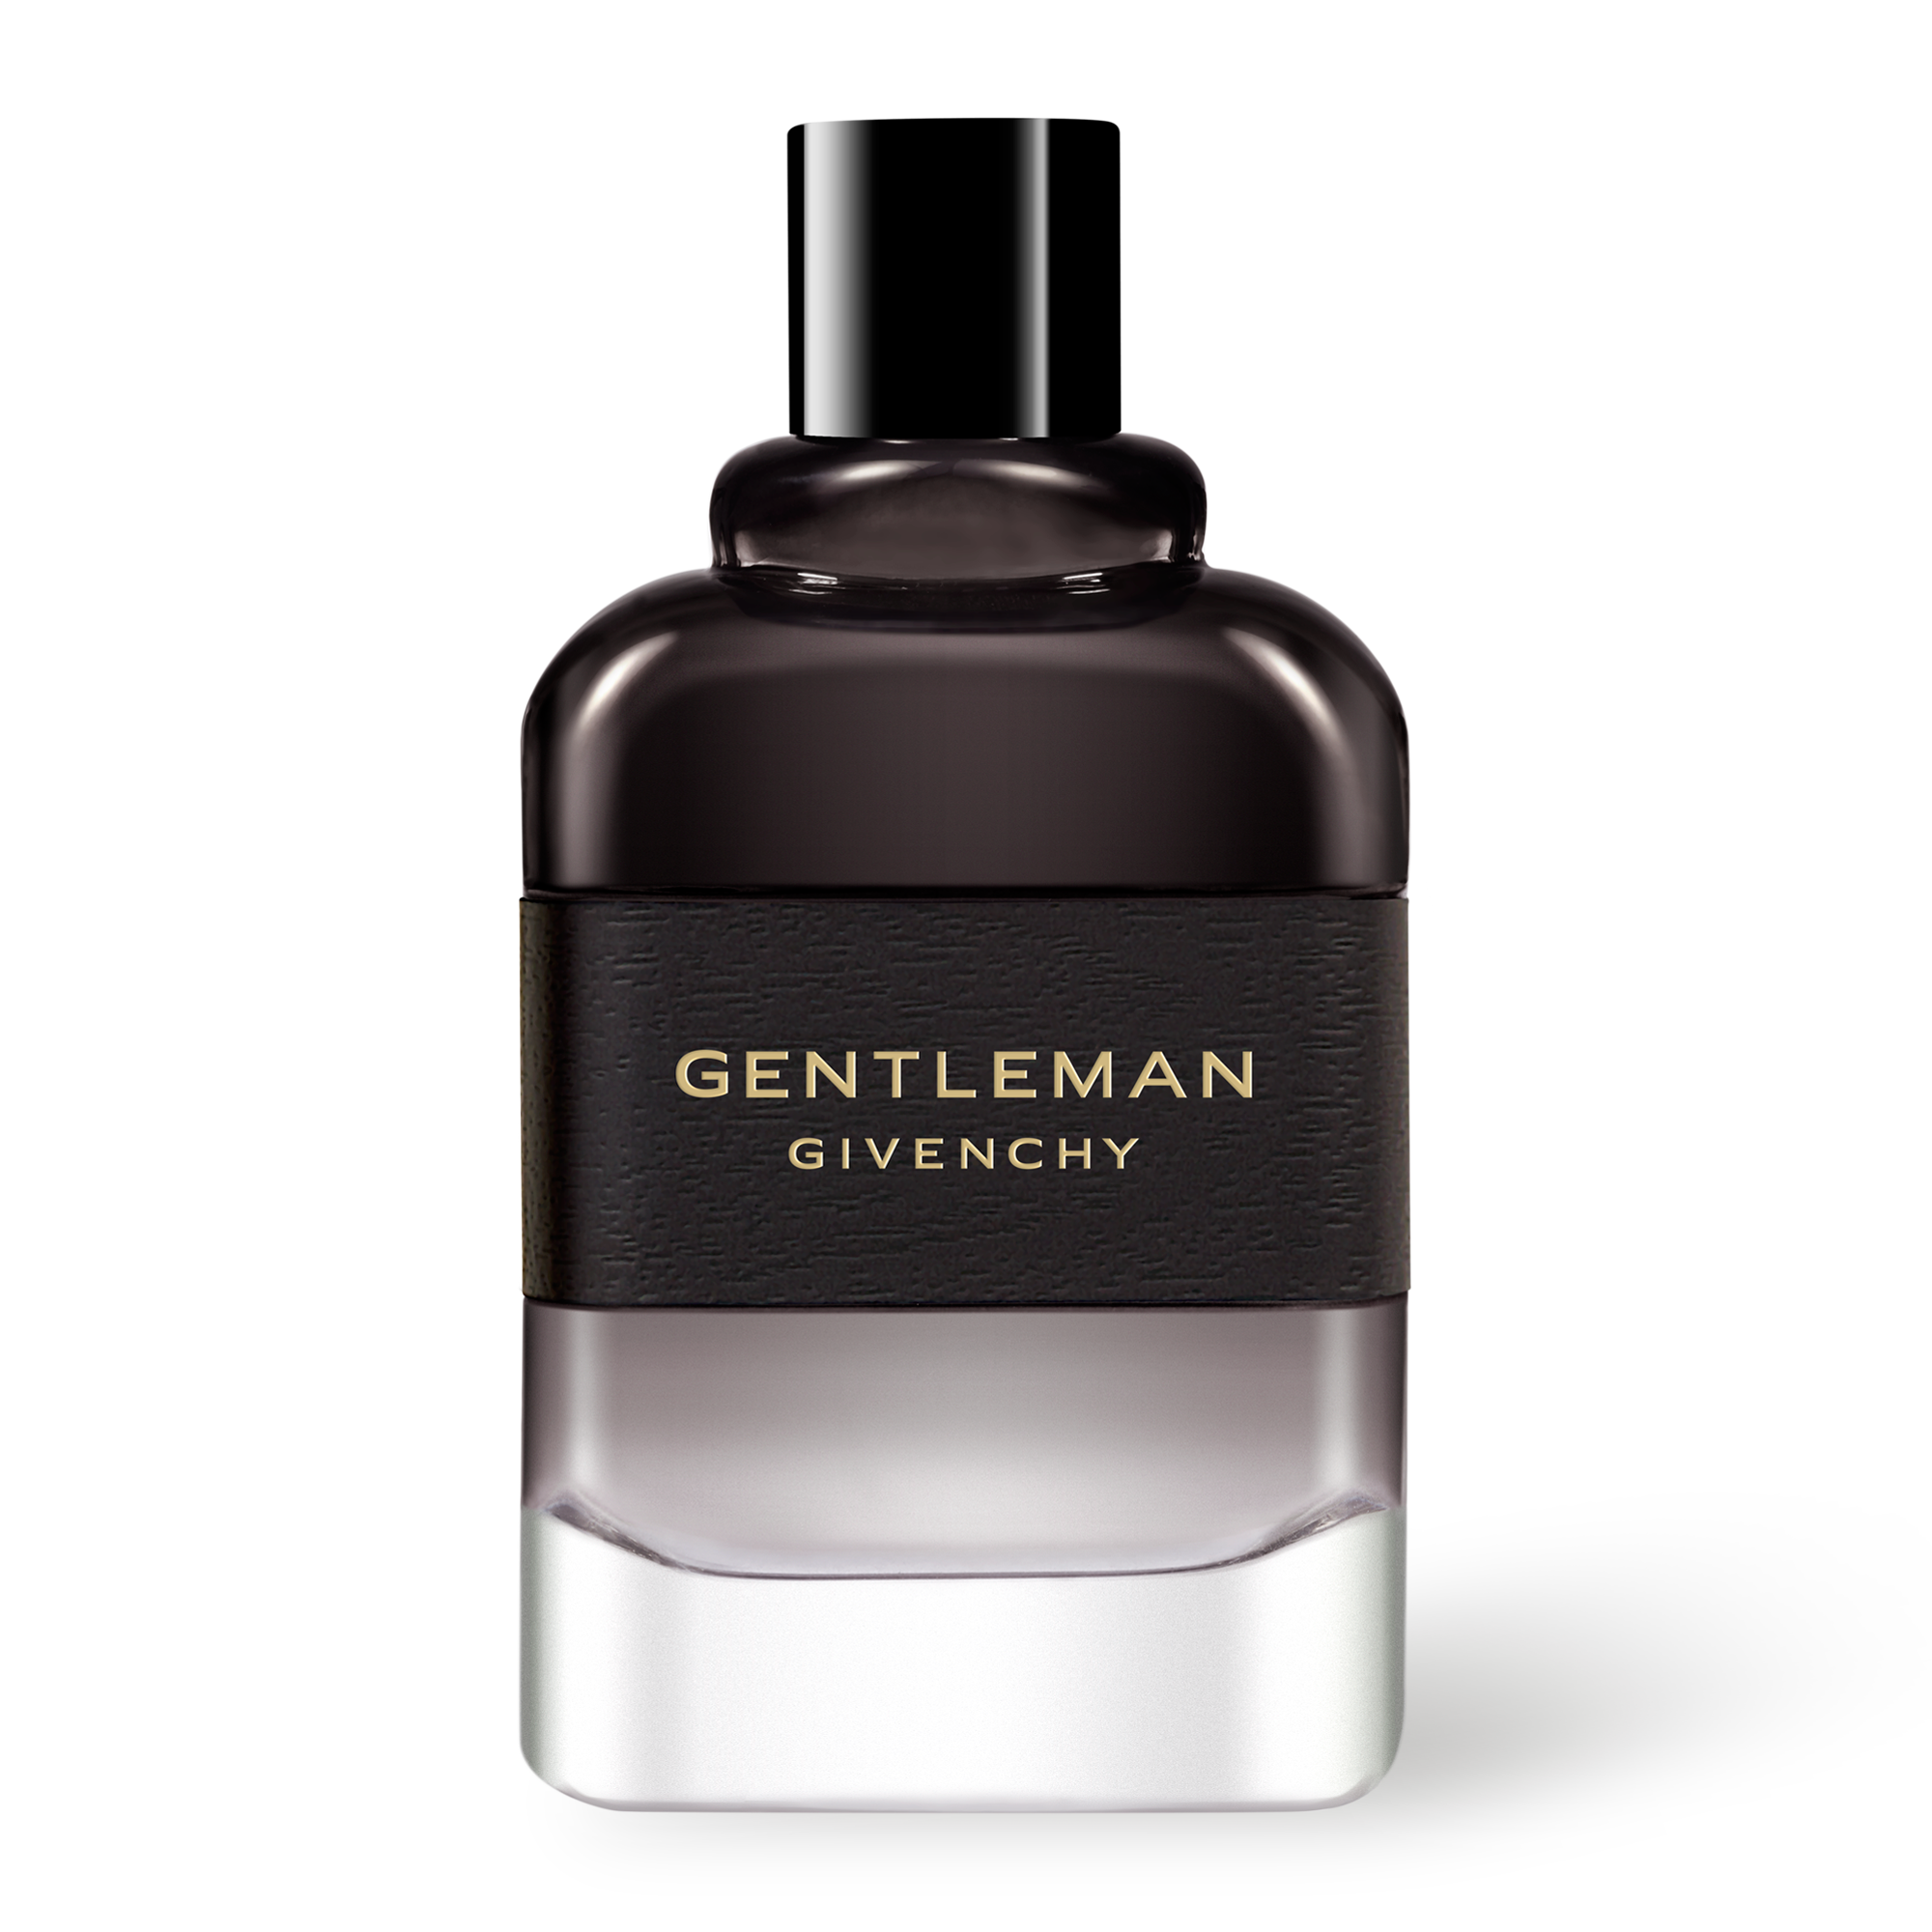 givency parfum